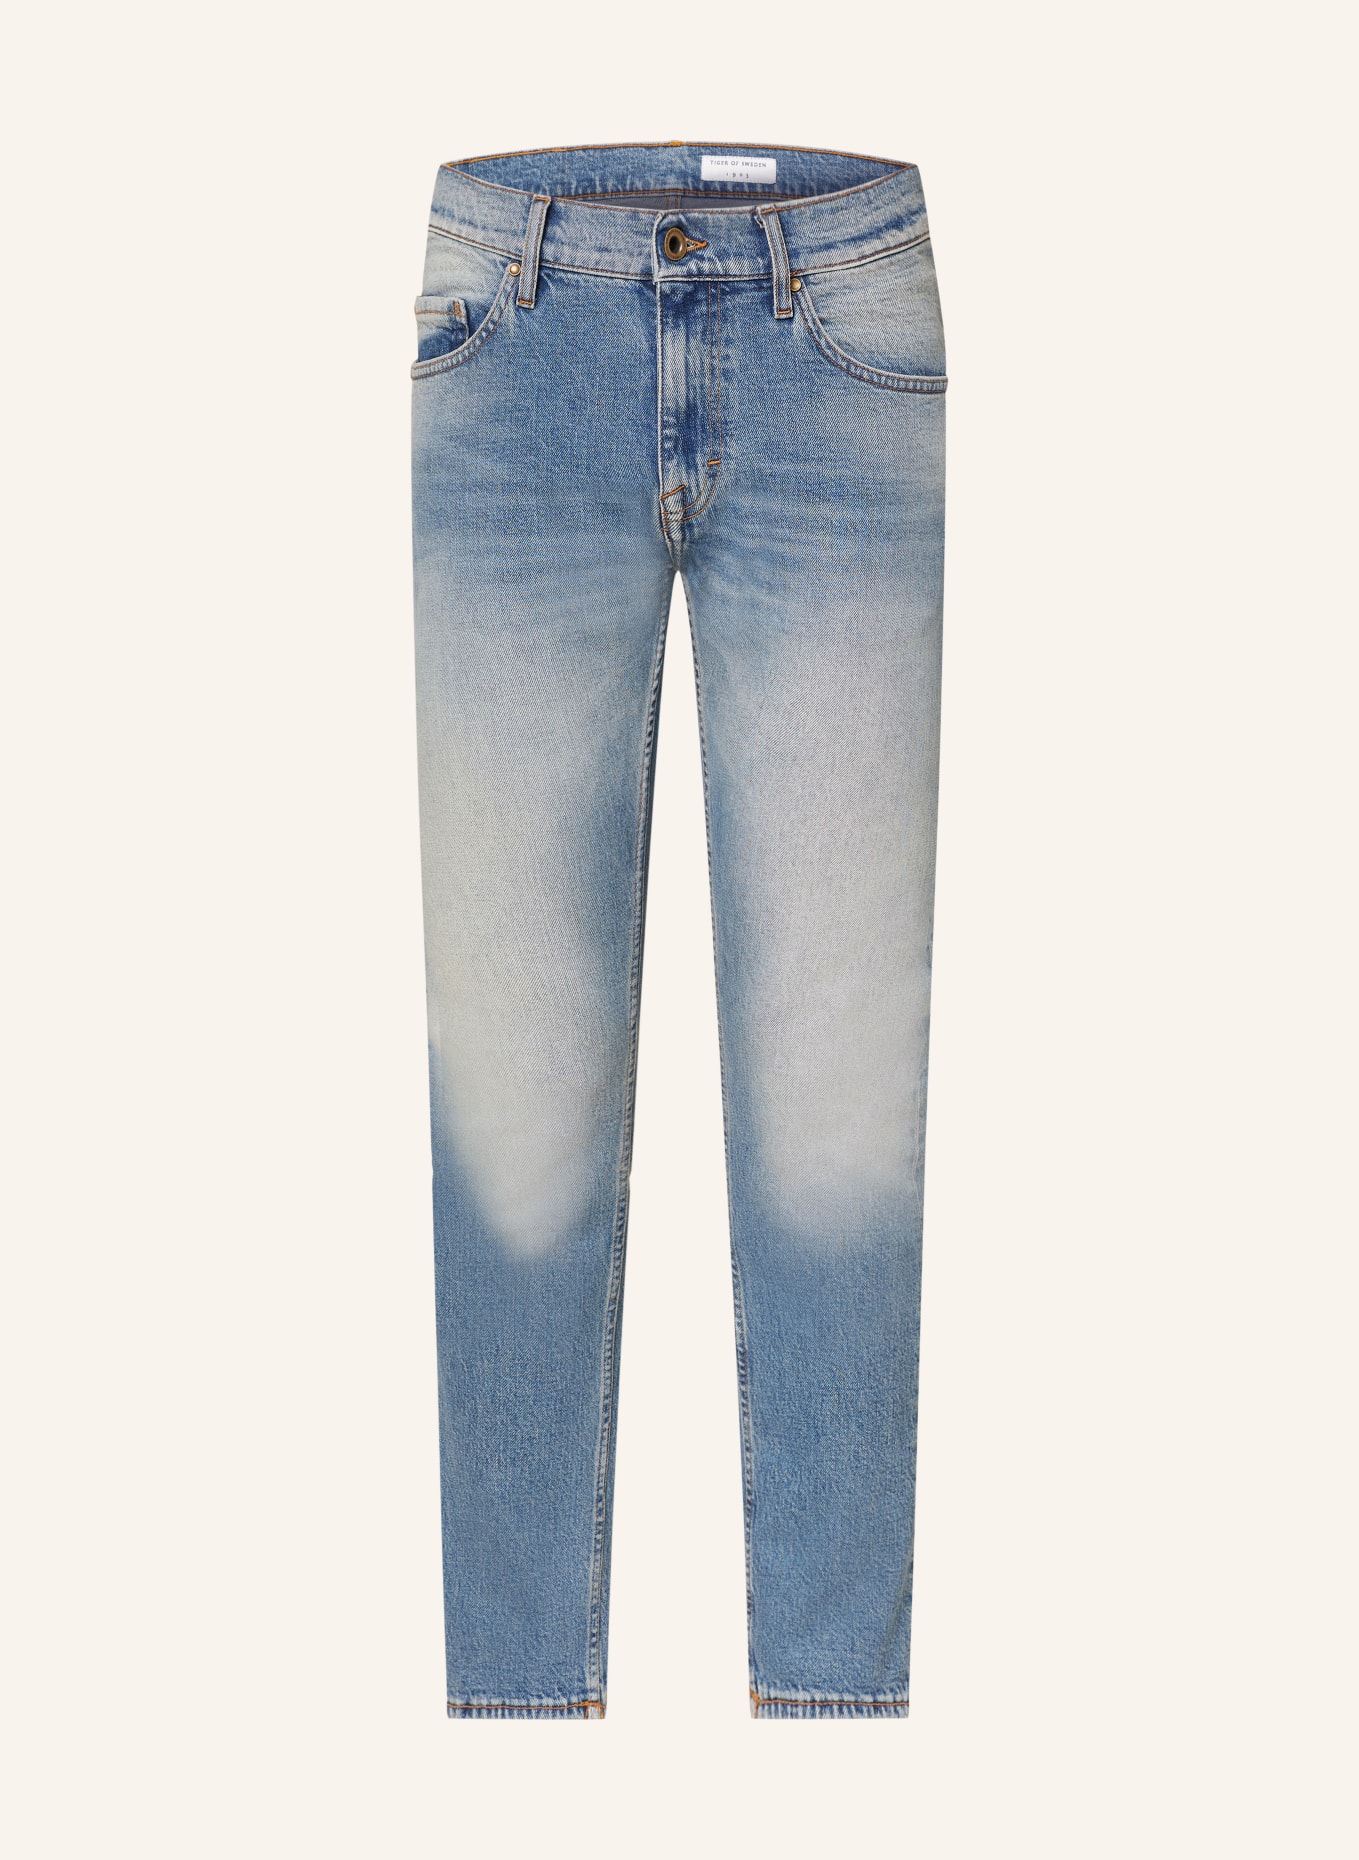 TIGER OF SWEDEN Jeans PISTOLERO Slim Fit, Farbe: 200 Light blue (Bild 1)